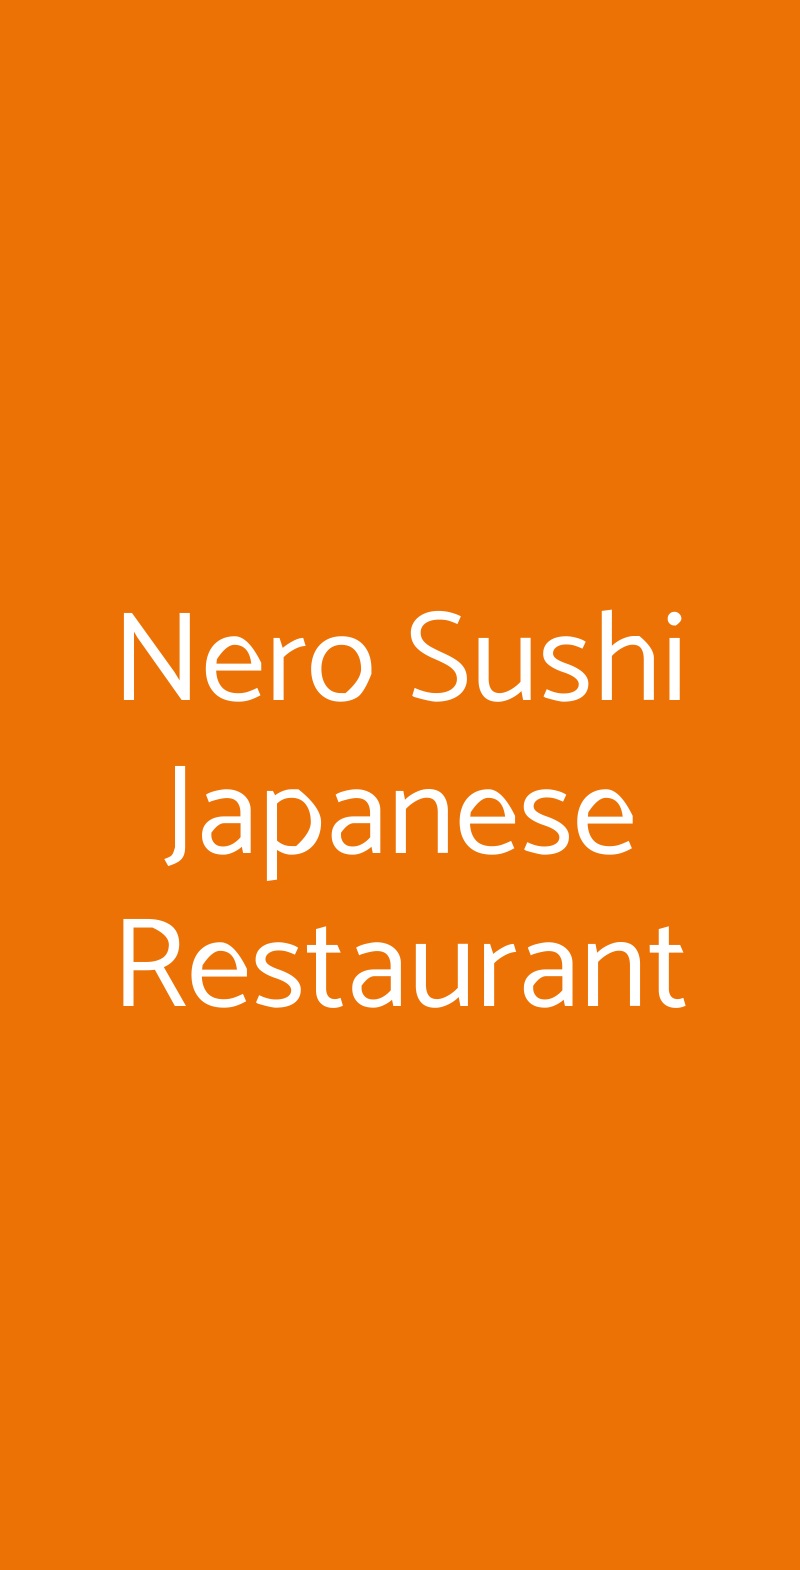 Nero Sushi Japanese Restaurant Napoli menù 1 pagina